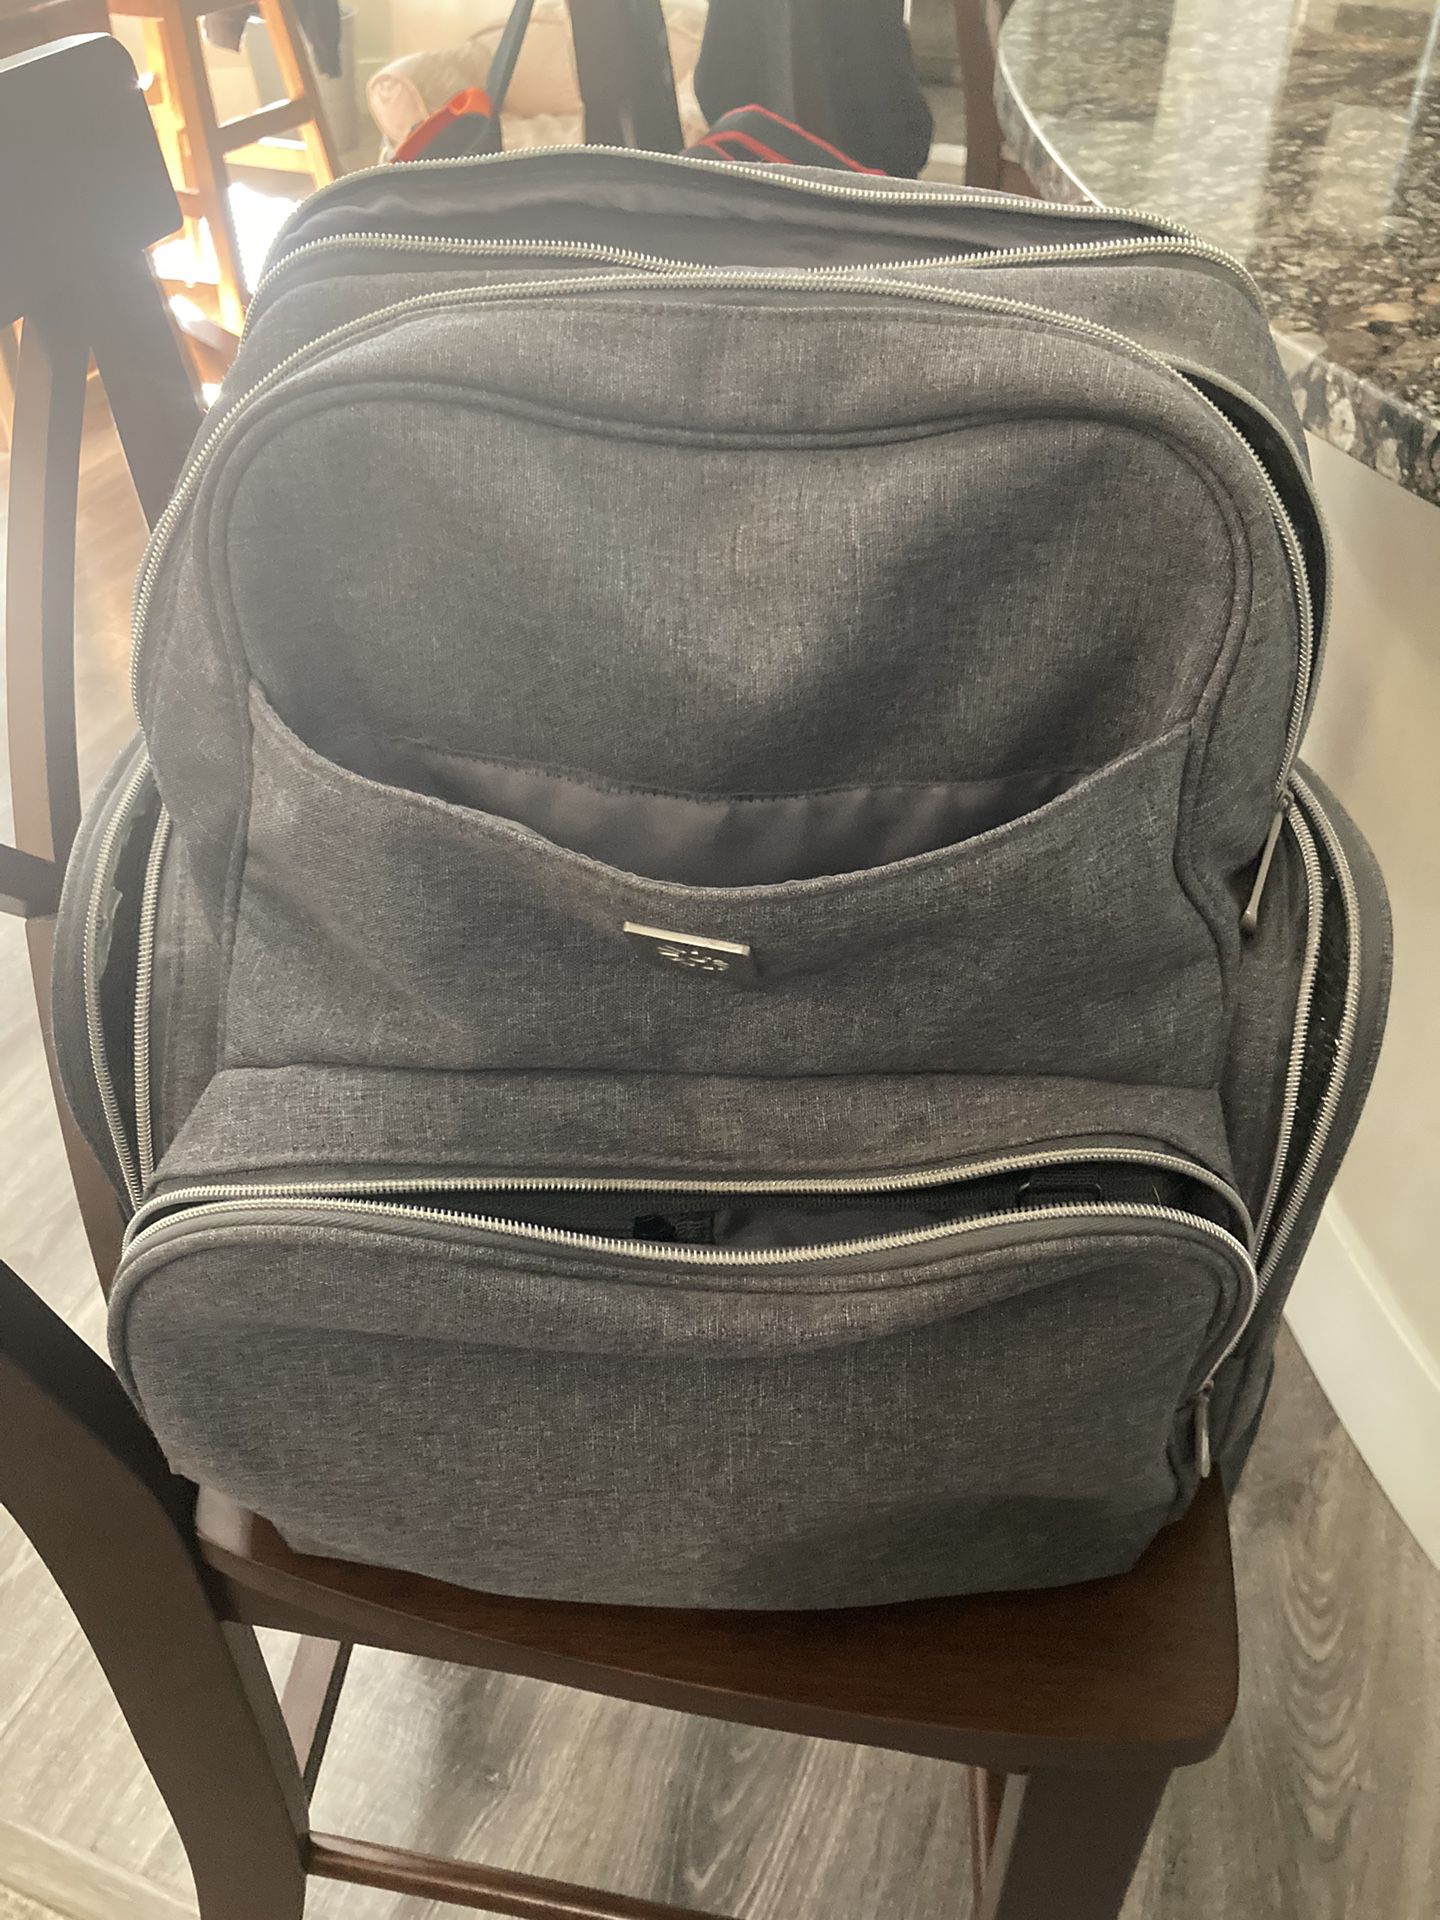 Ergobaby Diaper Bag Backpack